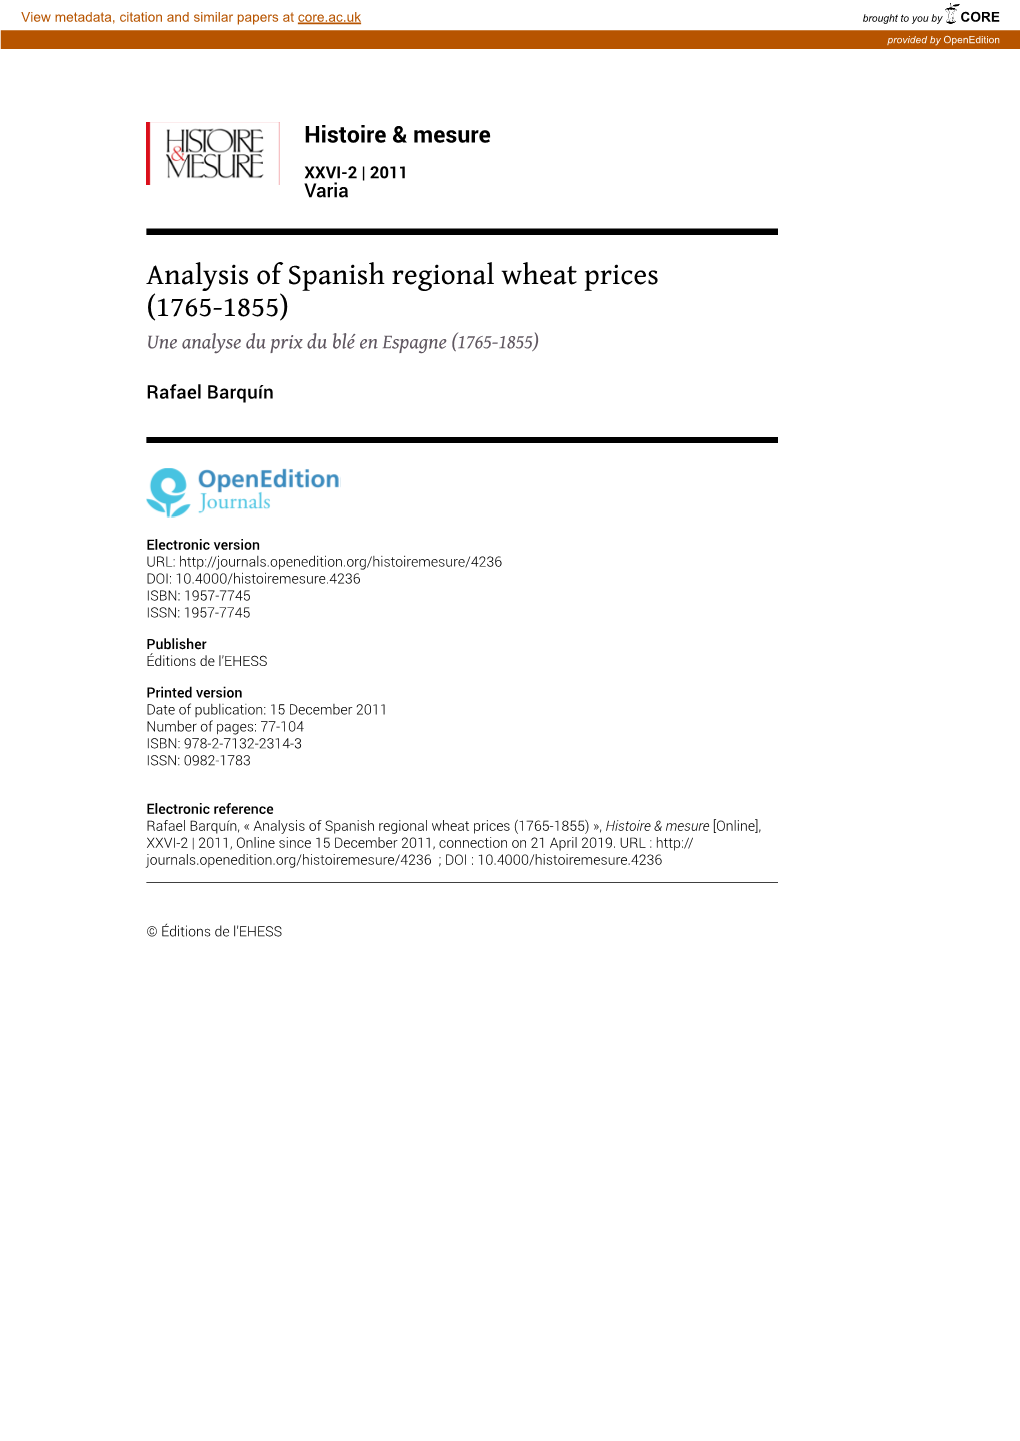 Analysis of Spanish Regional Wheat Prices \(1765-1855\)